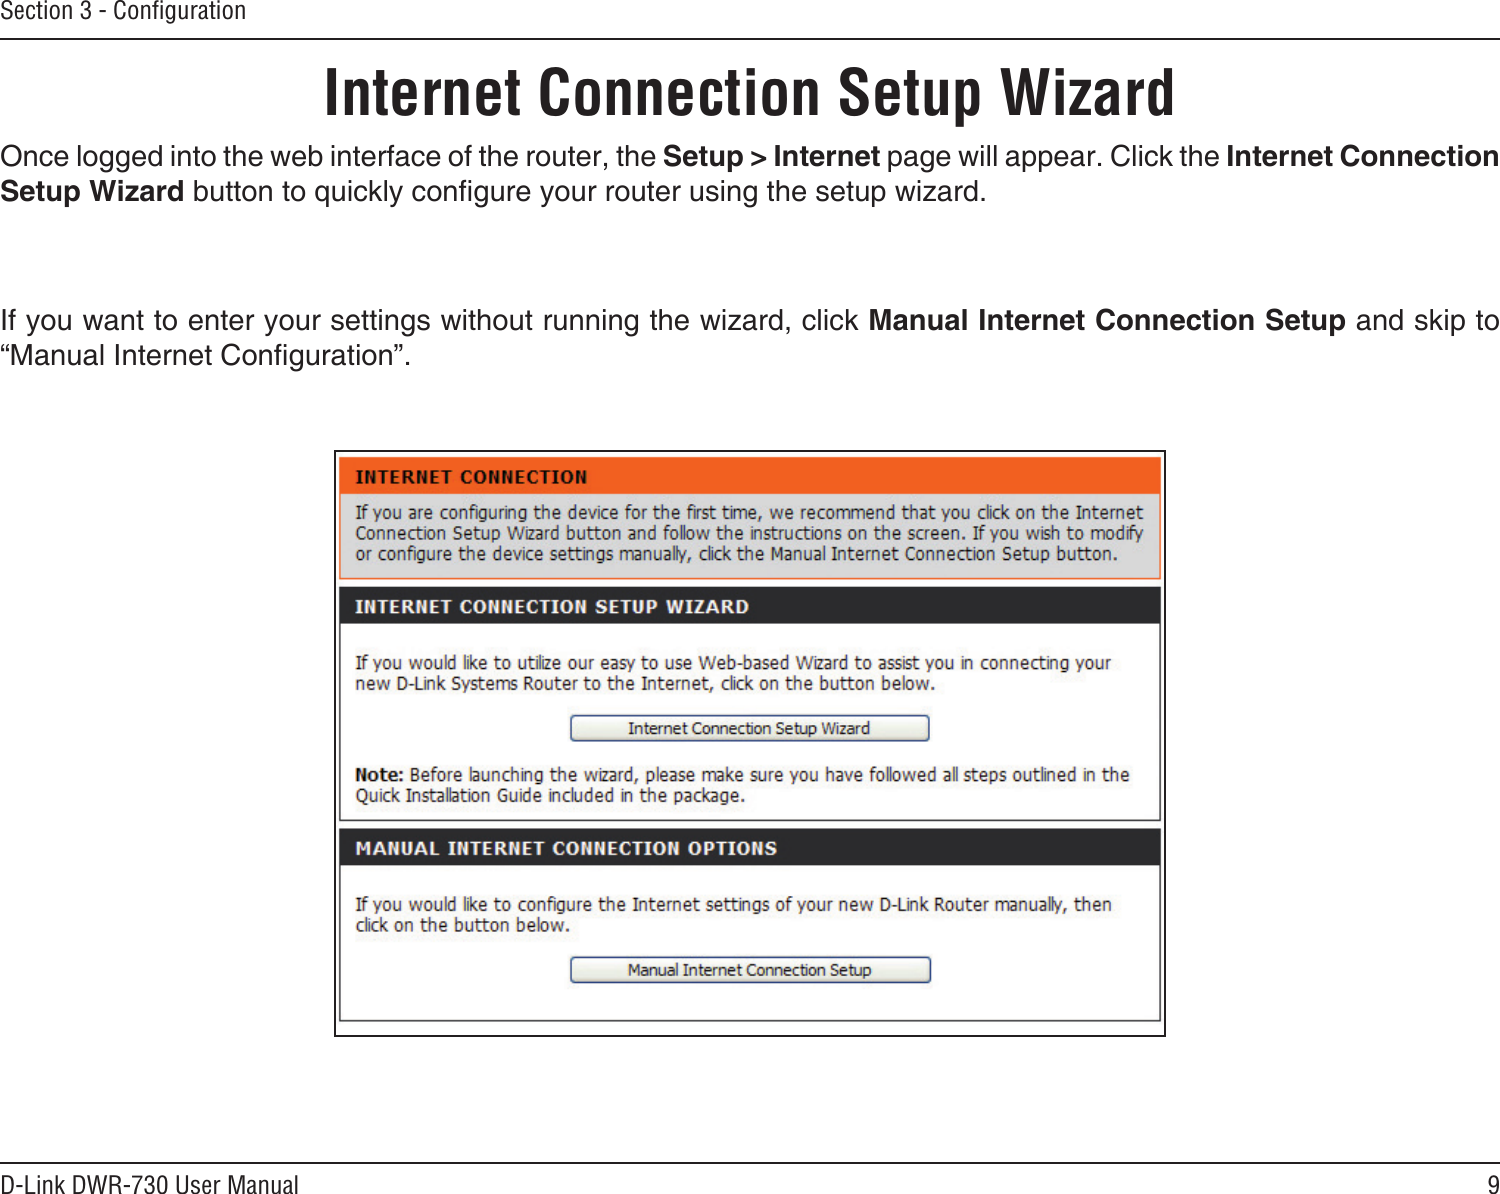 9D-Link DWR-730 User ManualSection 3 - ConﬁgurationInternet Connection Setup Wizard